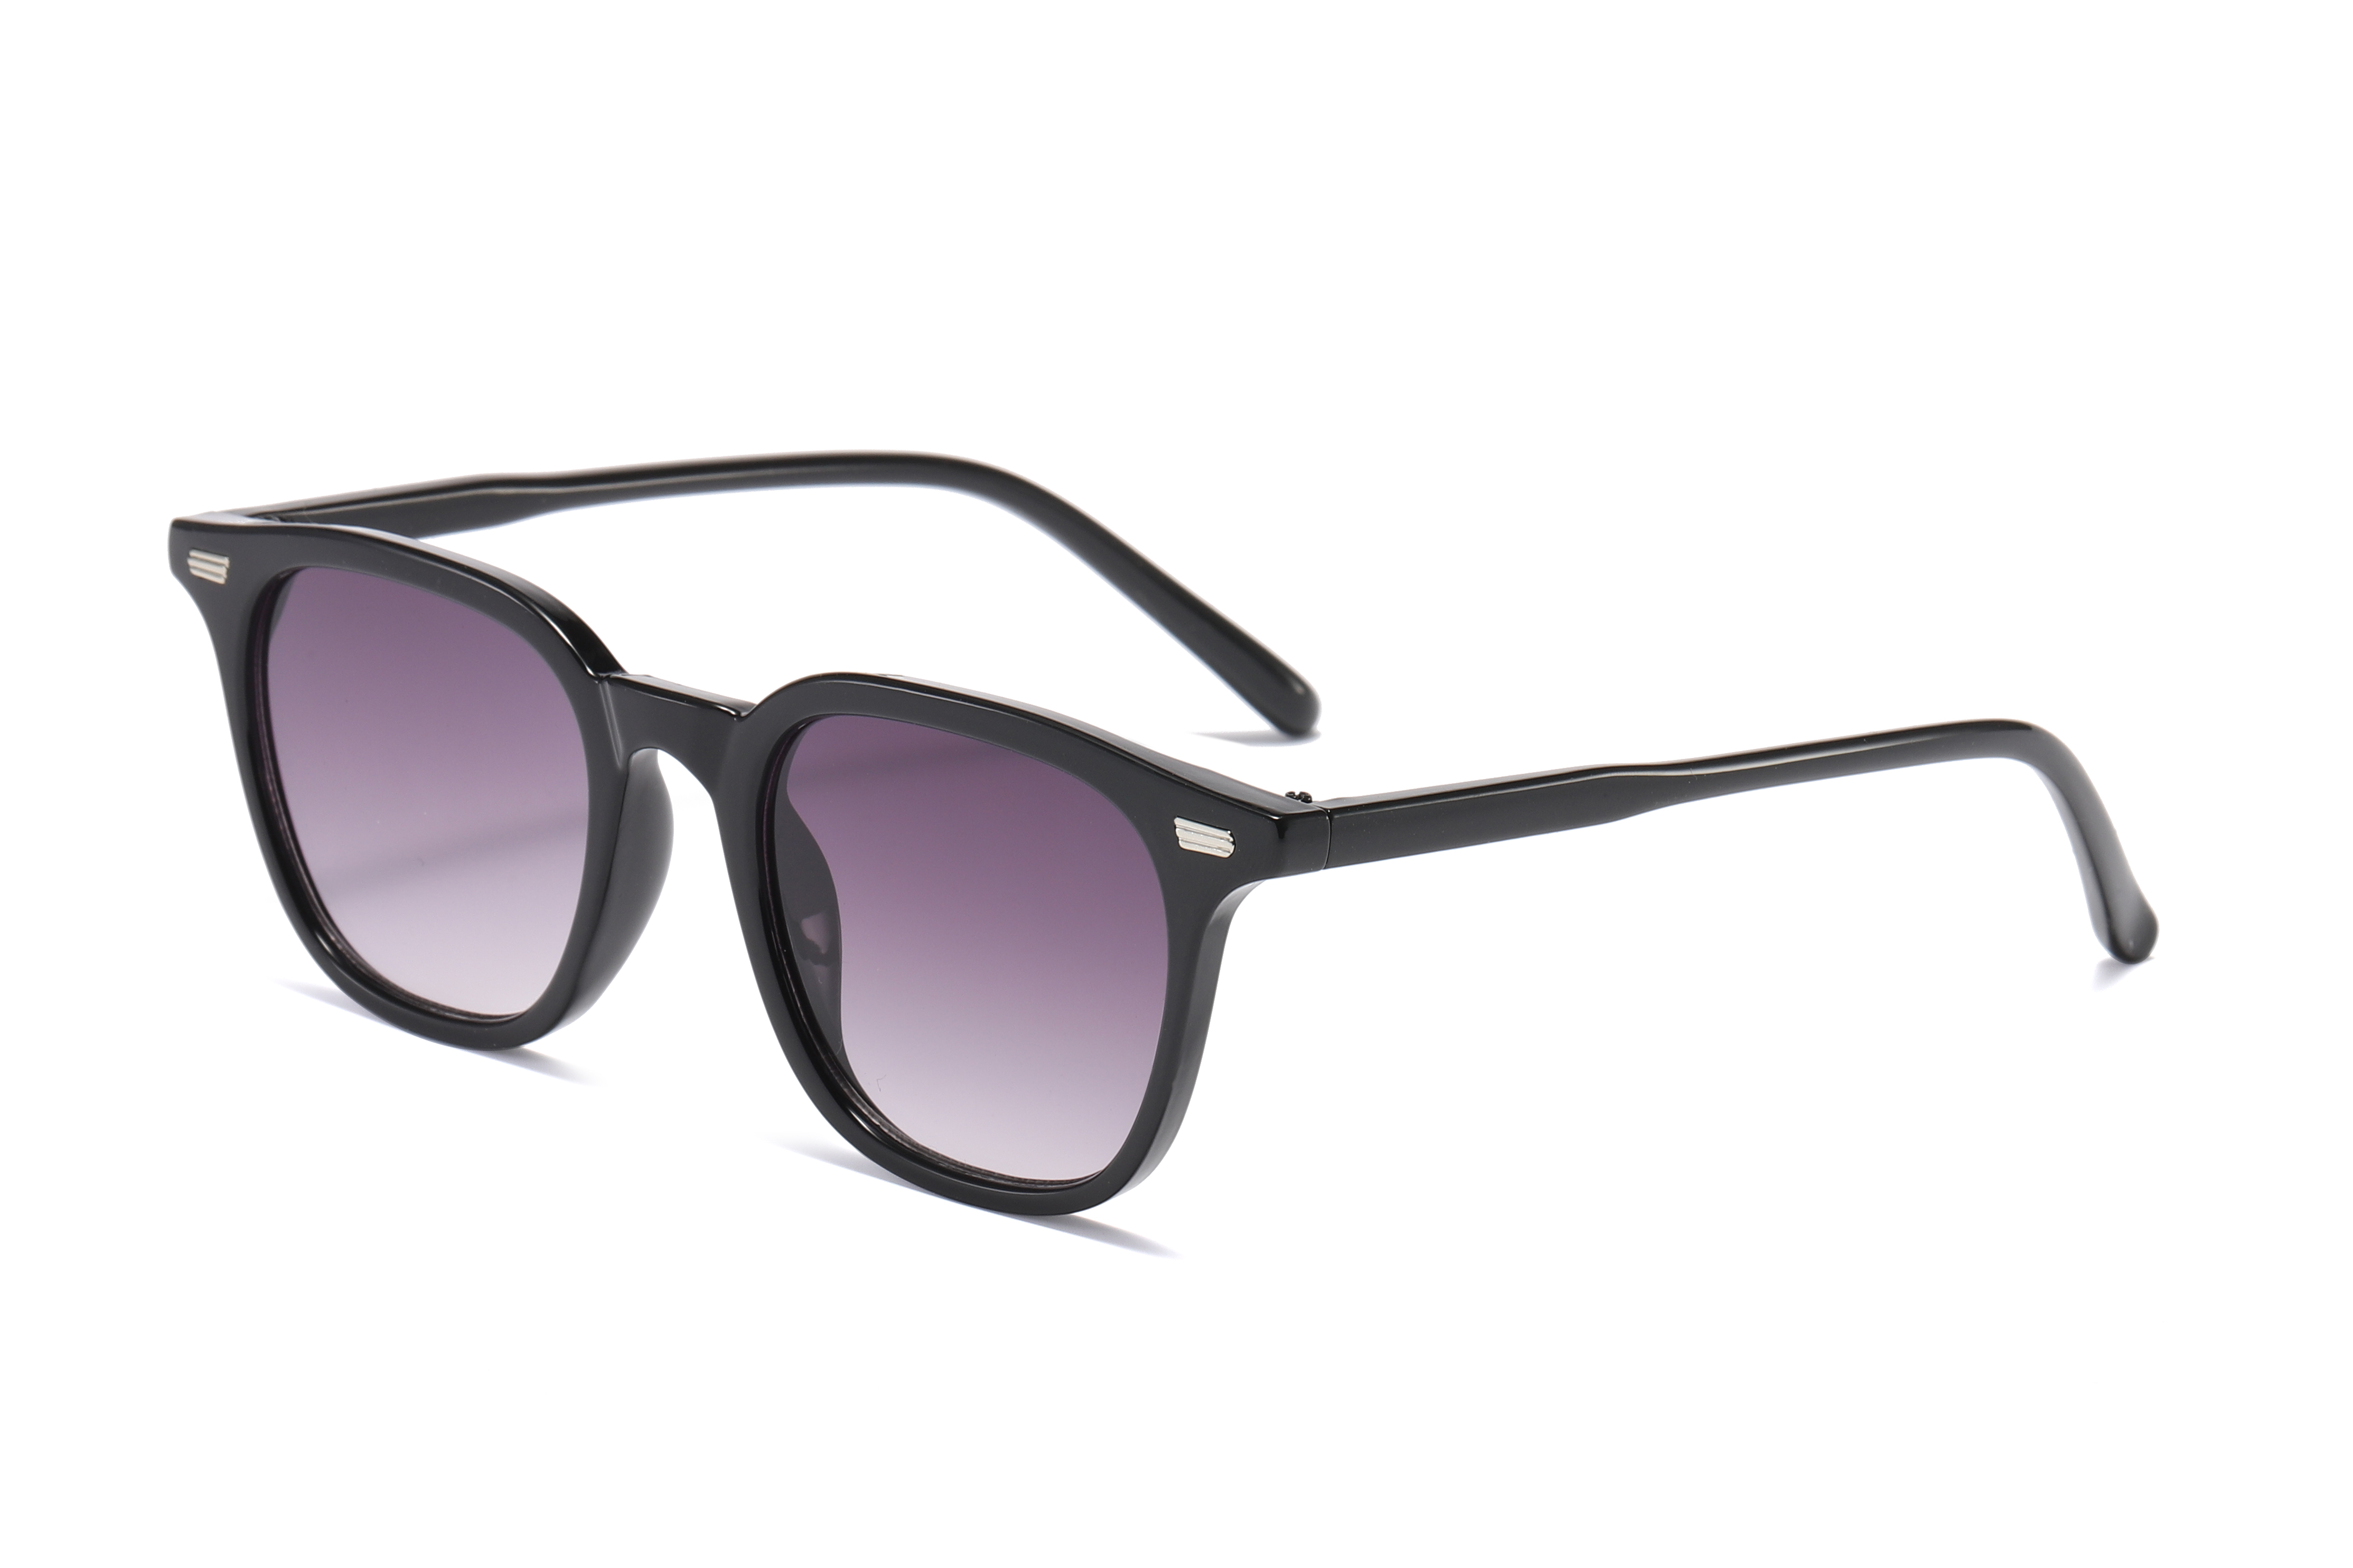 Óculos de sol PC clássicos da unissex Wayfarer #81592